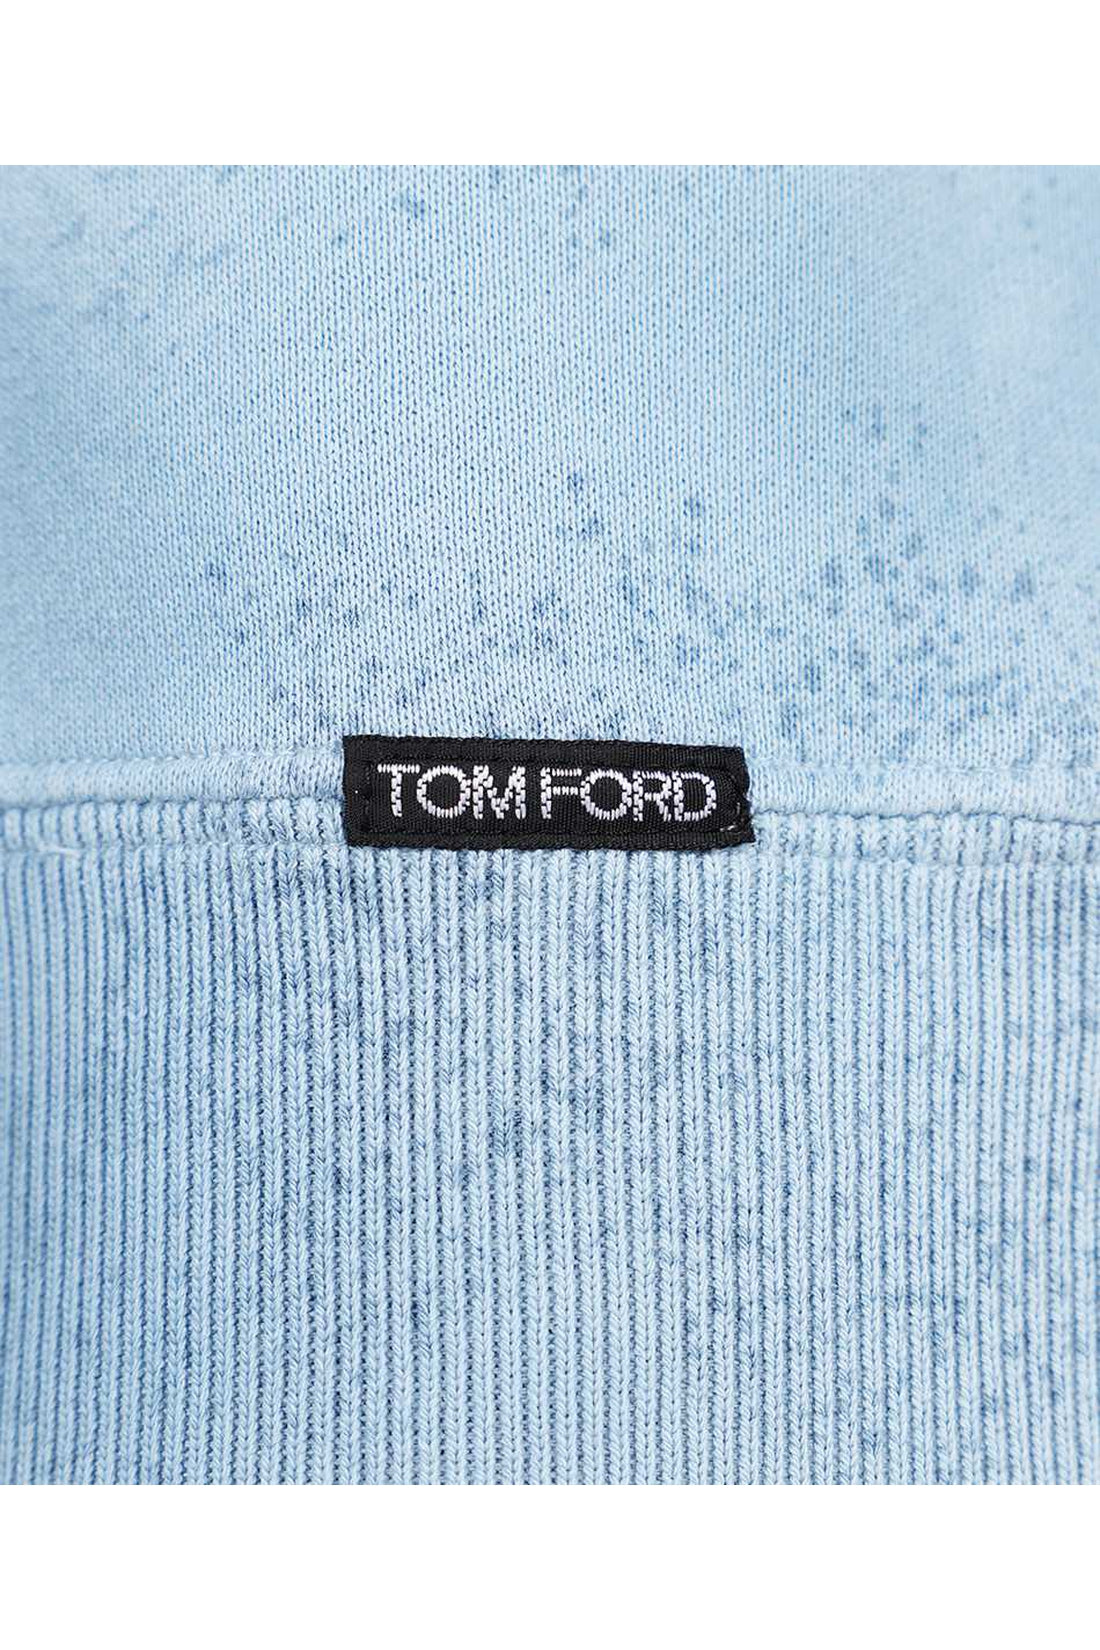 Tom Ford-OUTLET-SALE-Cotton crew-neck sweatshirt-ARCHIVIST